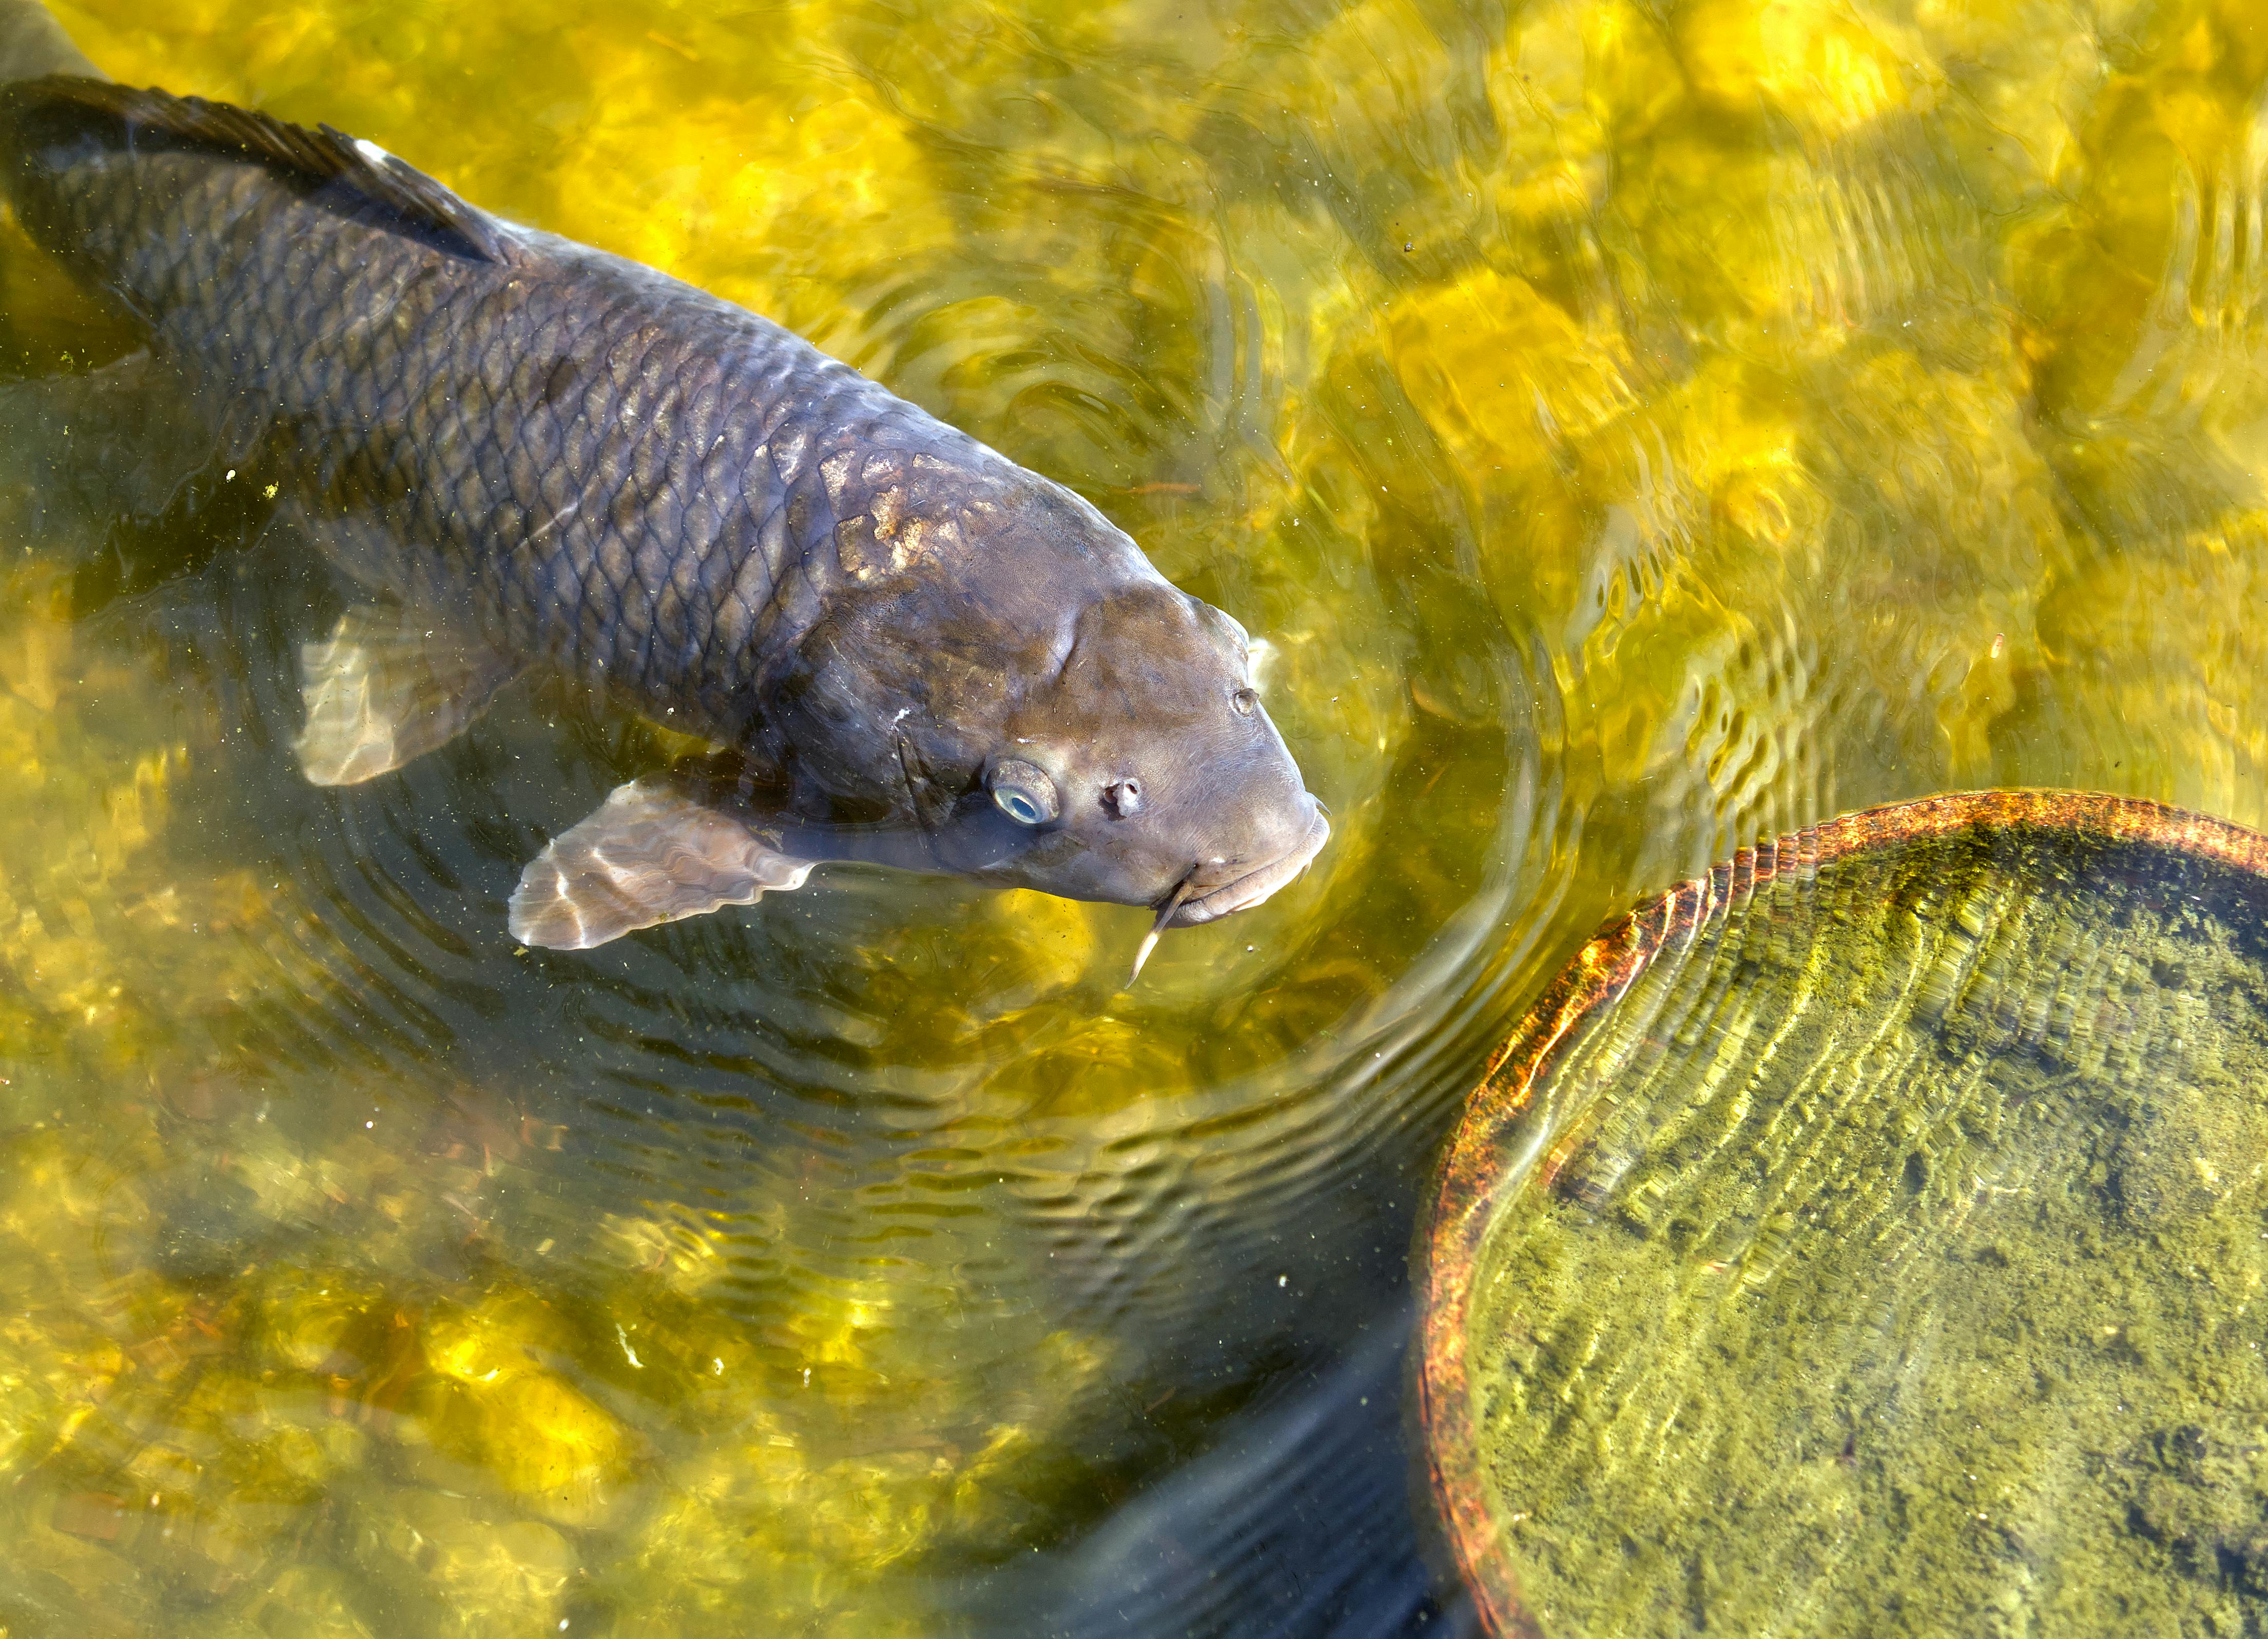 Royalty-Free photo: Close up photo of gray fish tail